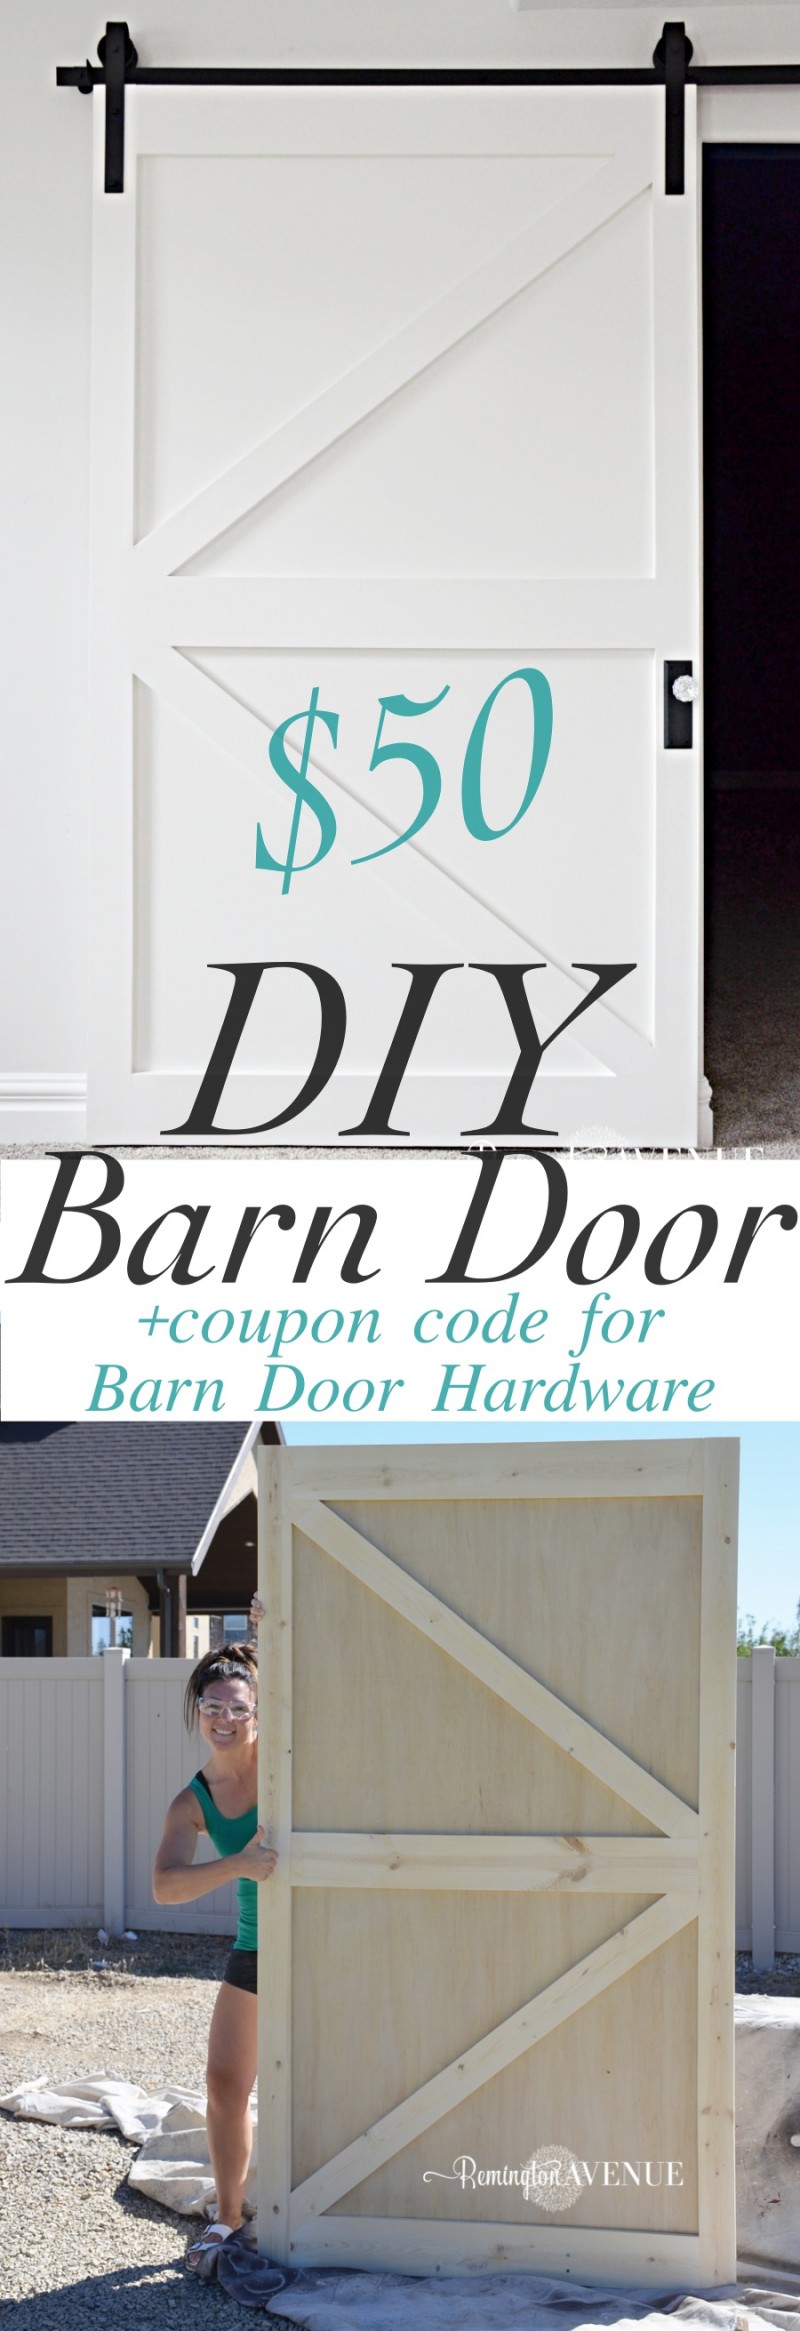 50-diy-british-brace-barn-door-90